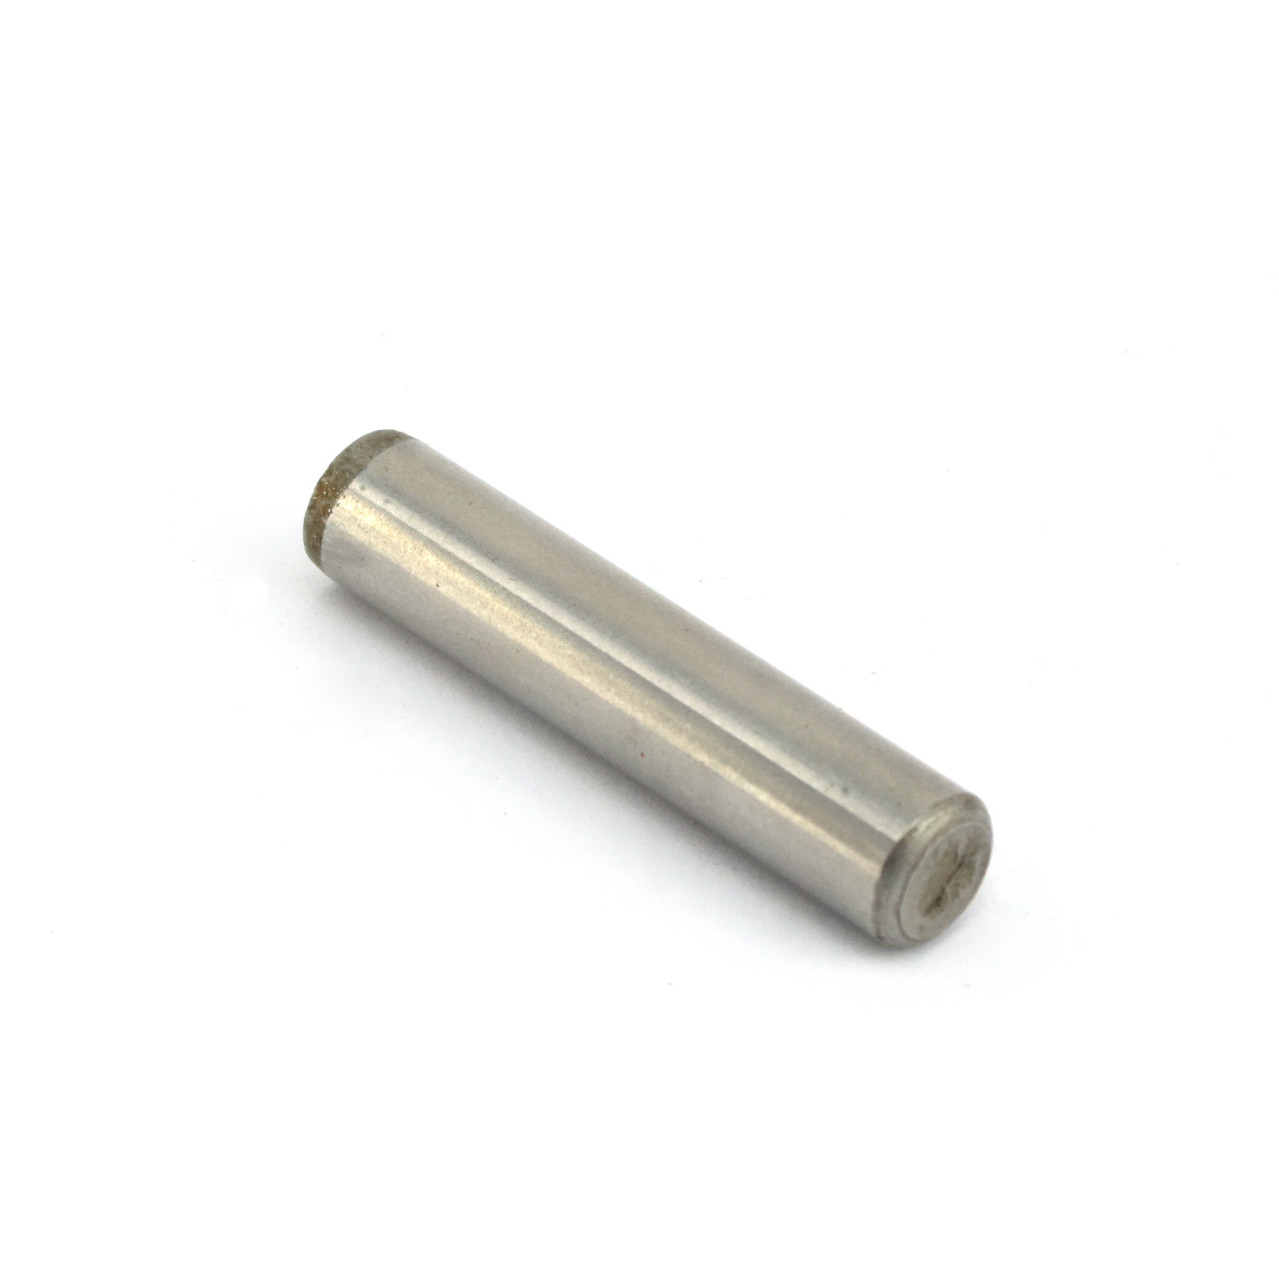 Chrome Metal Diaper Pin (14 X 1/4) At Great Prices!